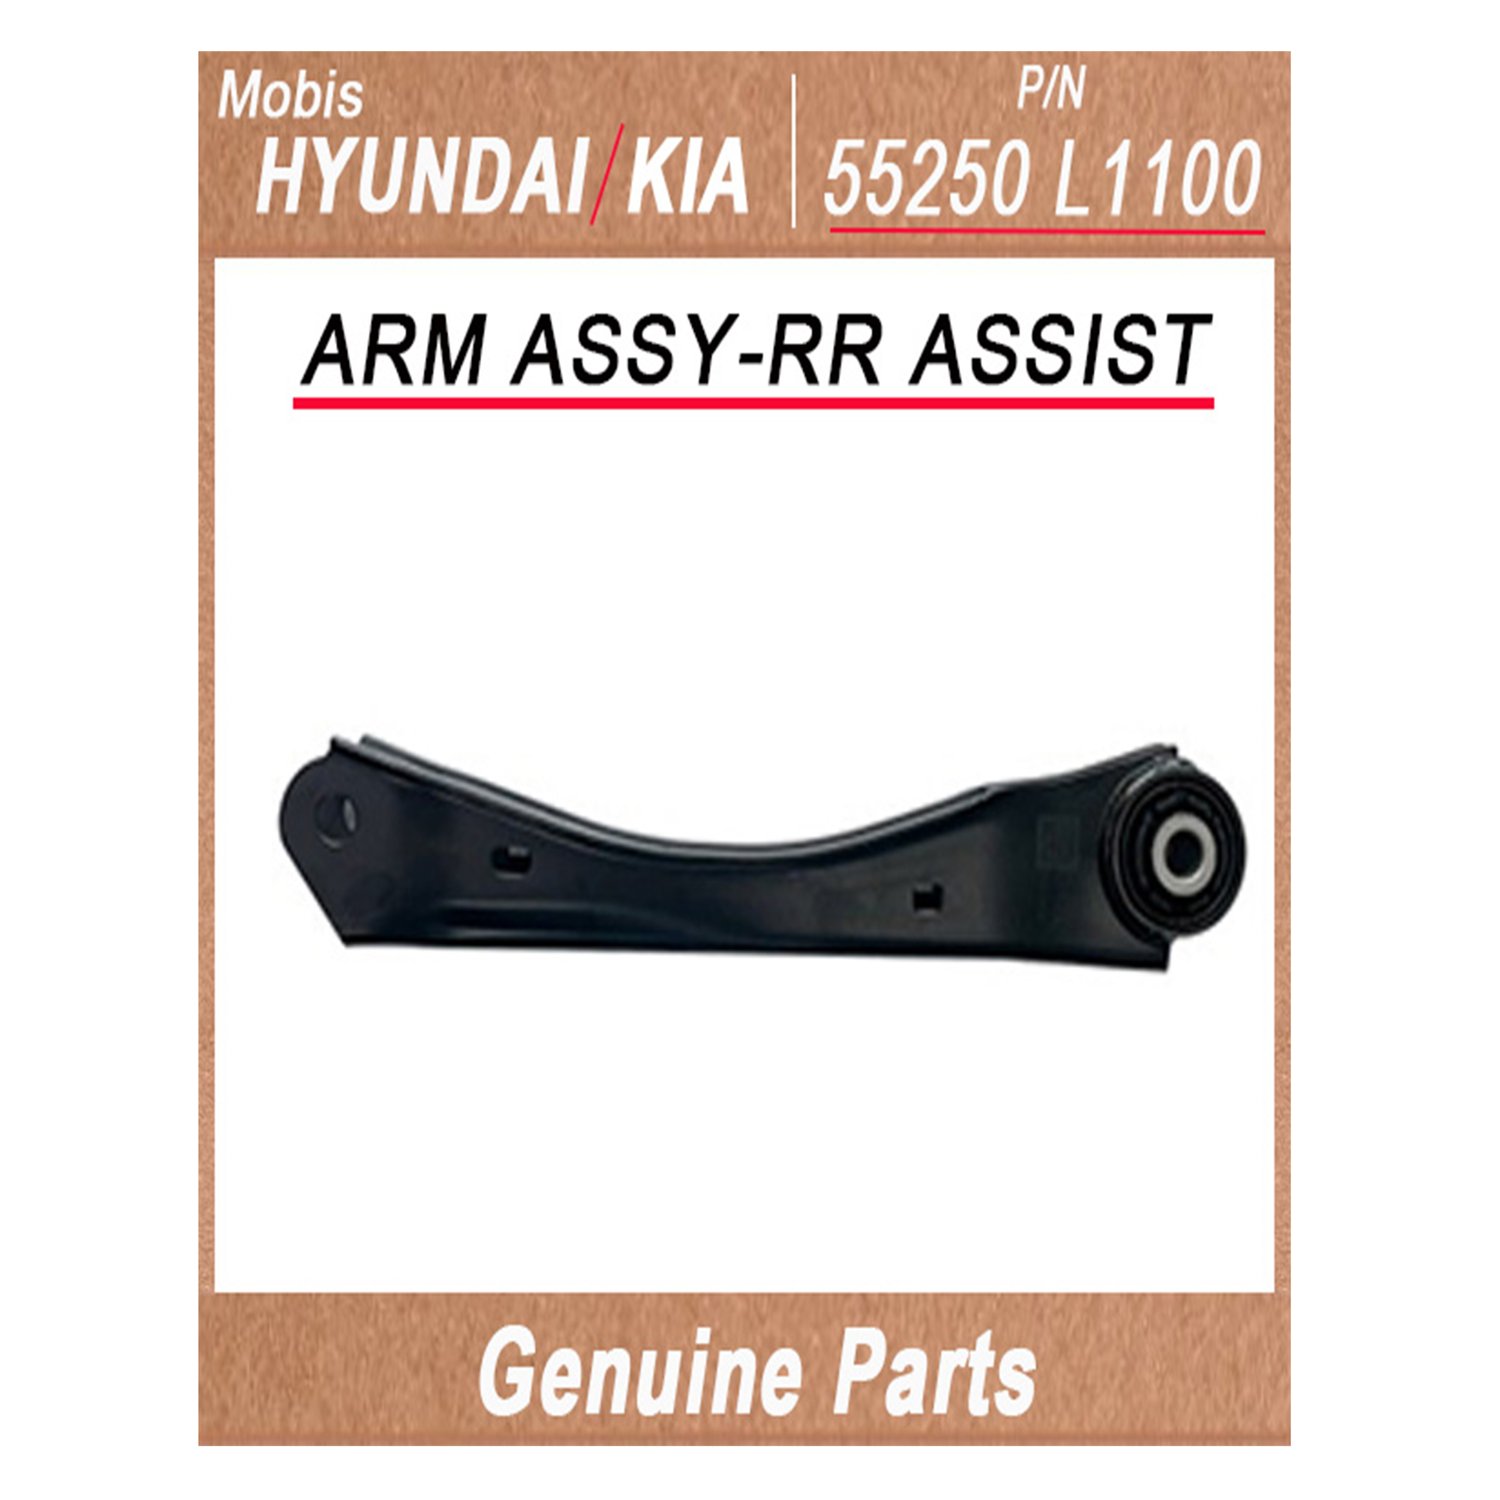 55250L1100 _ ARM ASSY_RR ASSIST _ Genuine Korean Automotive Spare Parts _ Hyundai Kia _Mobis_